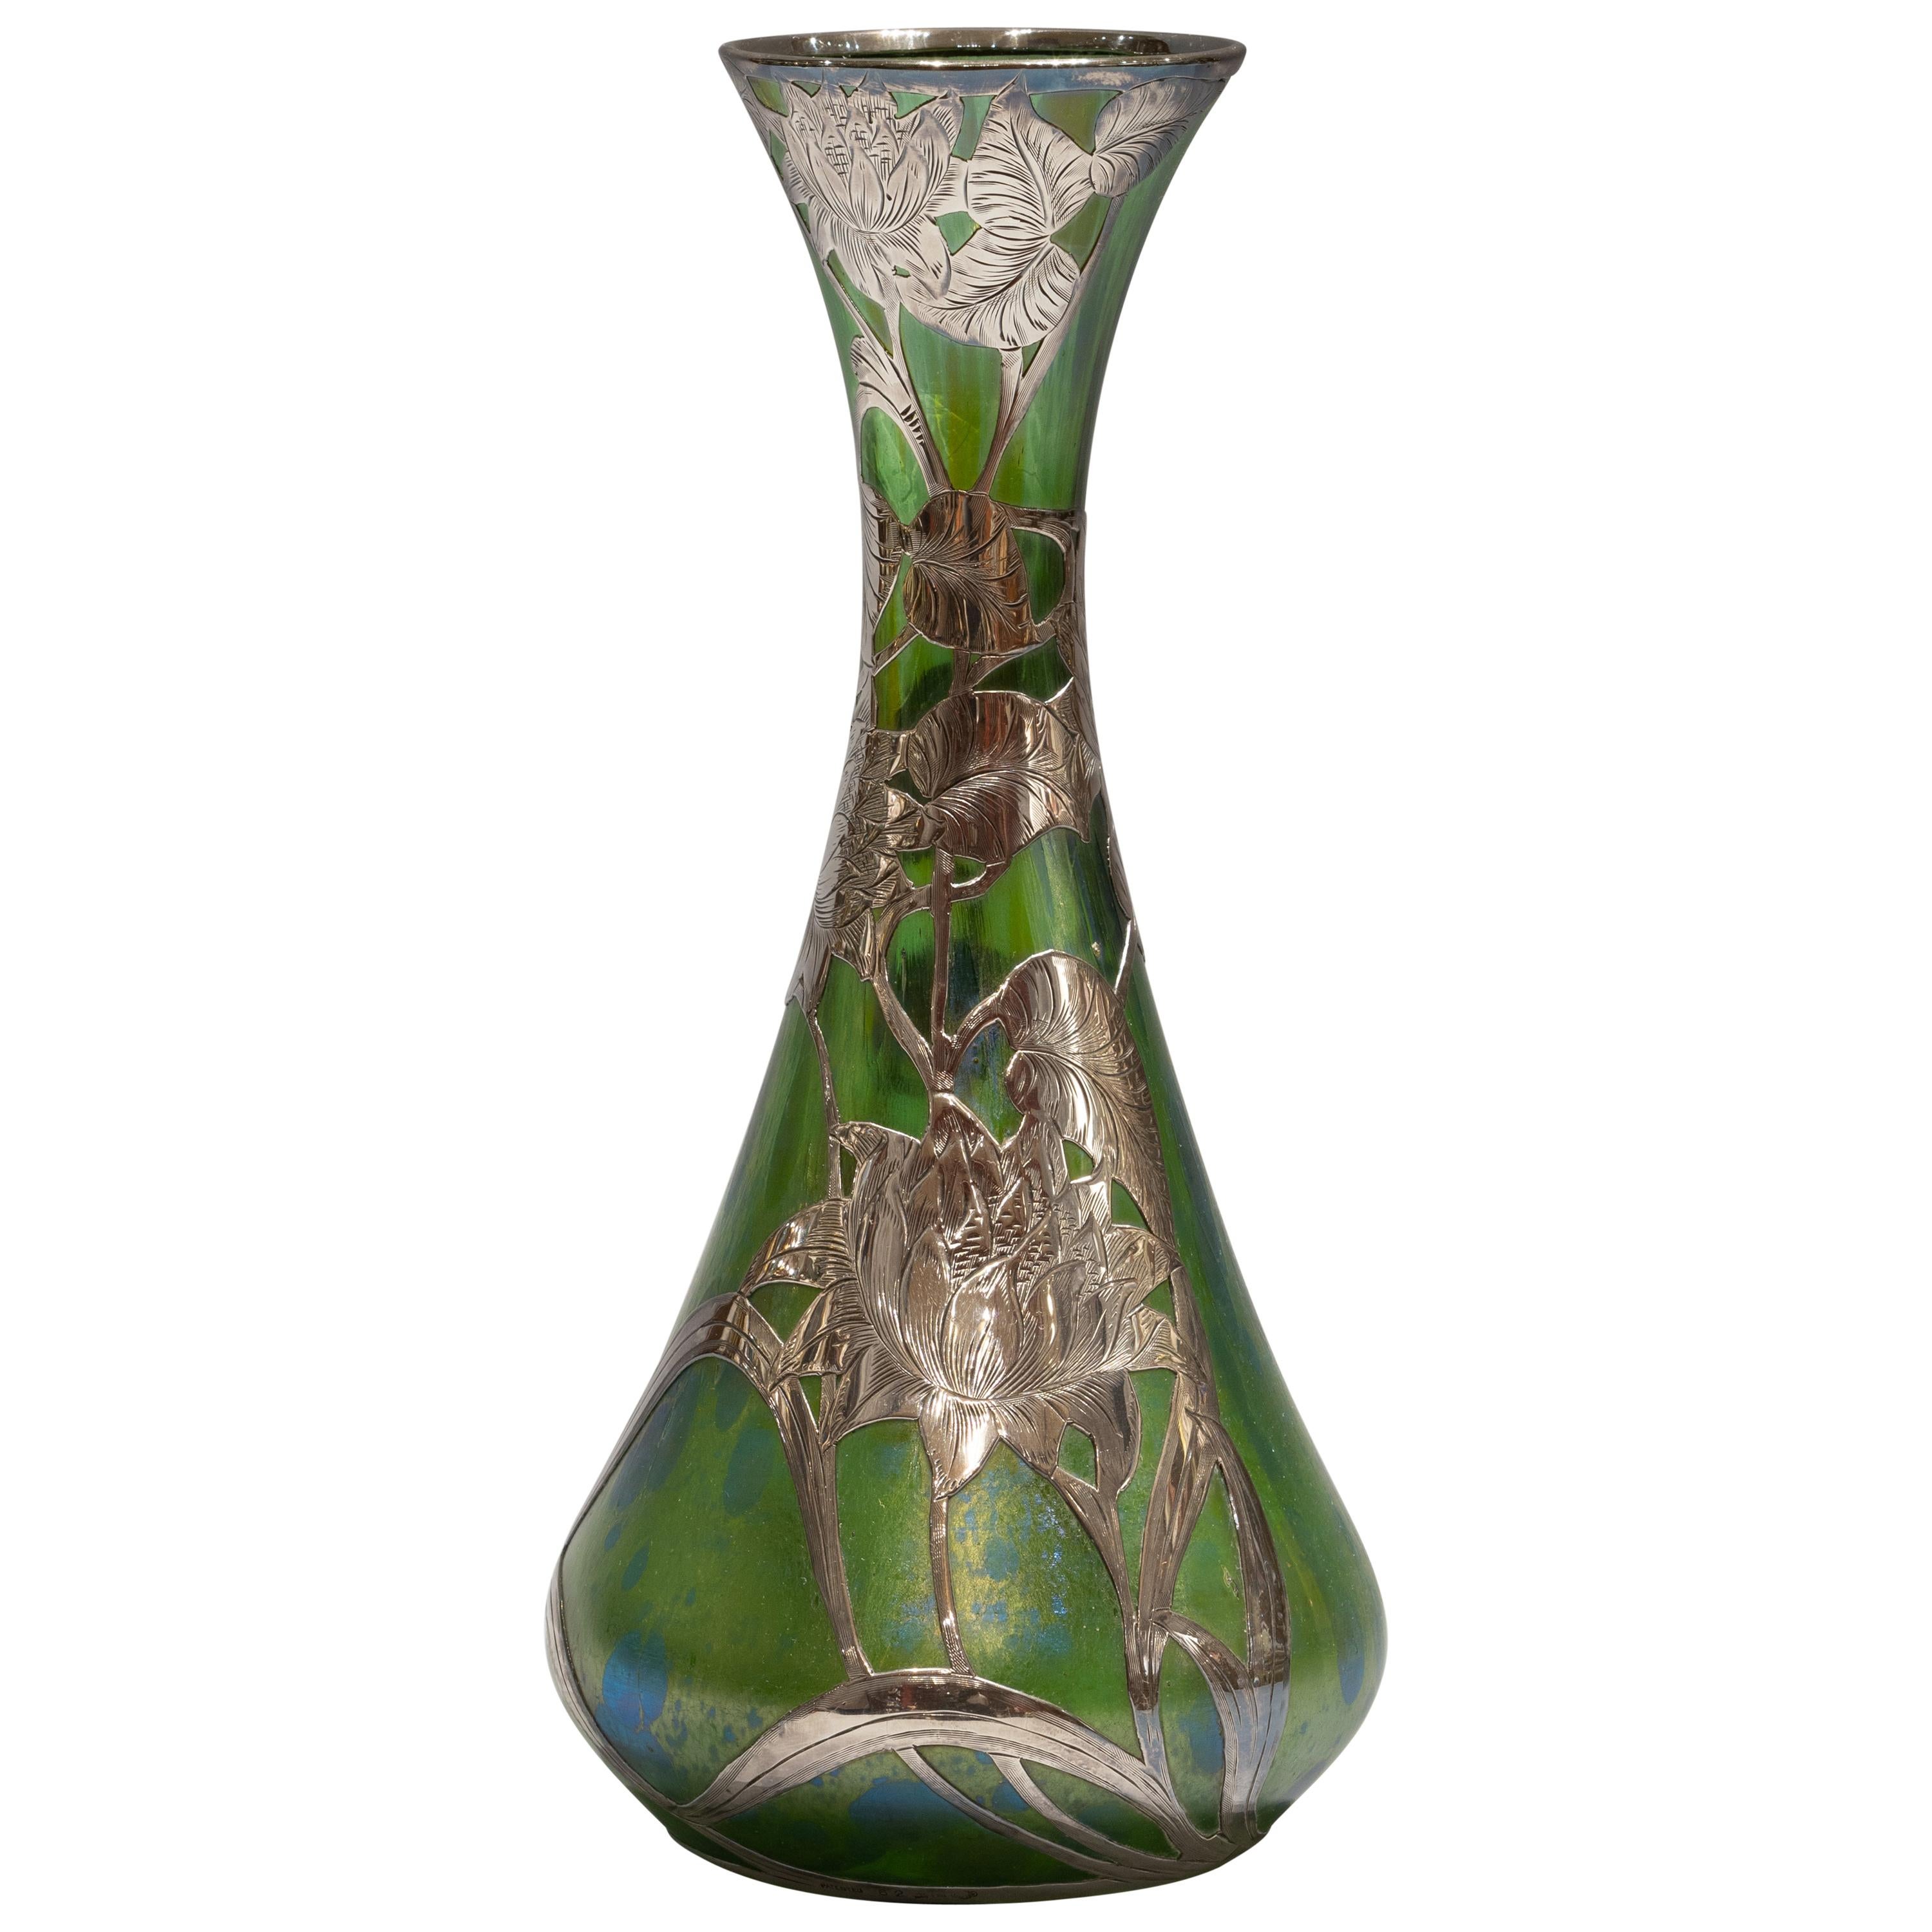 Loetz Alvin Silver Overlay Glass Vase, circa 1900